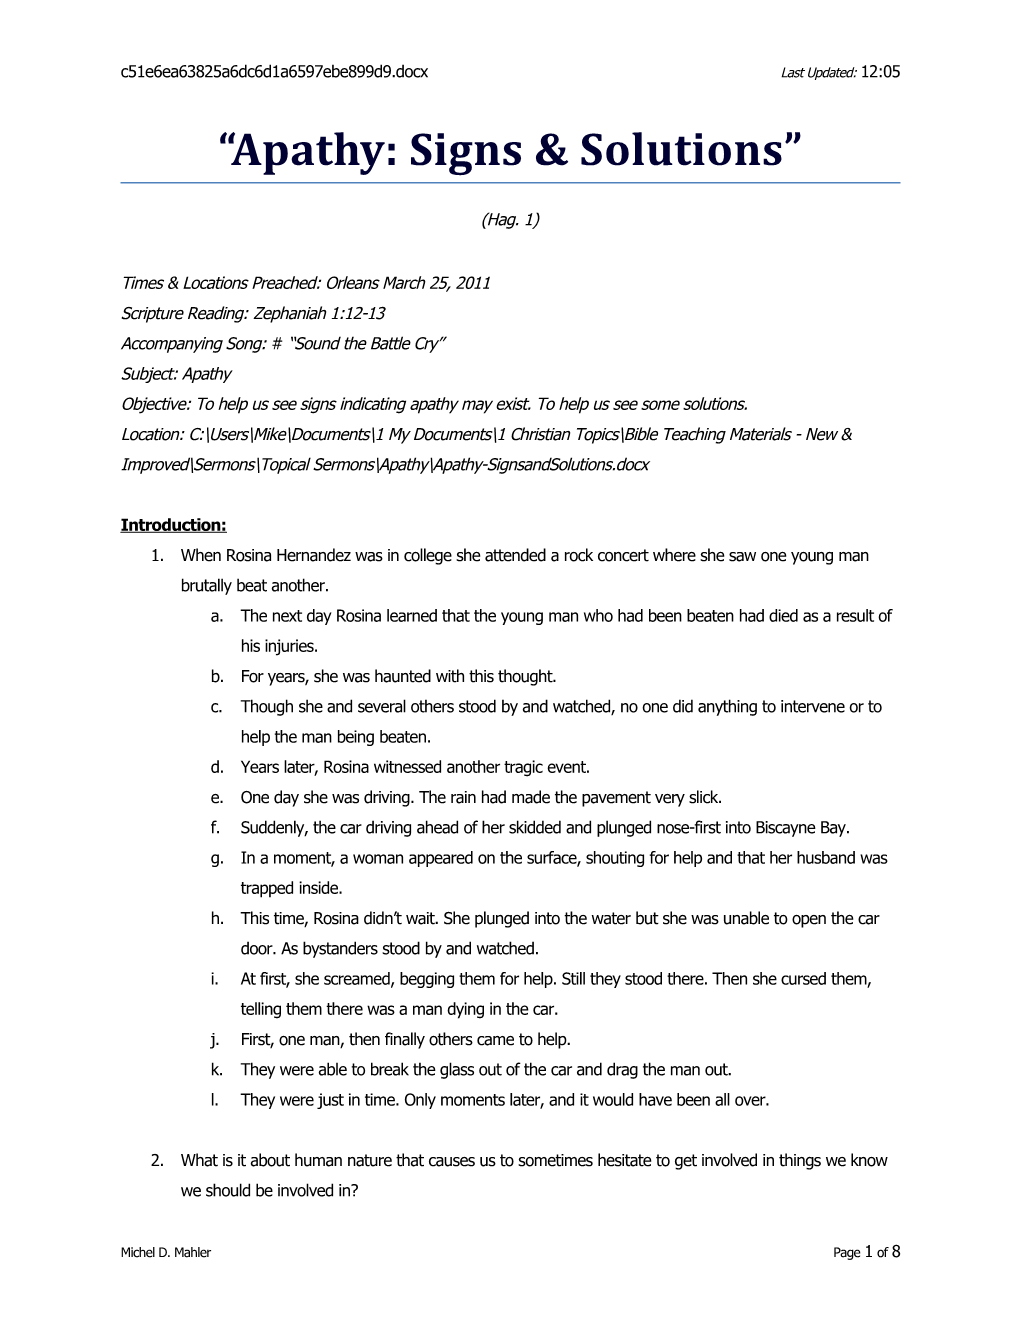 Apathy-Signsandsolutionslast Updated: 3/24/2012 11:51 PM